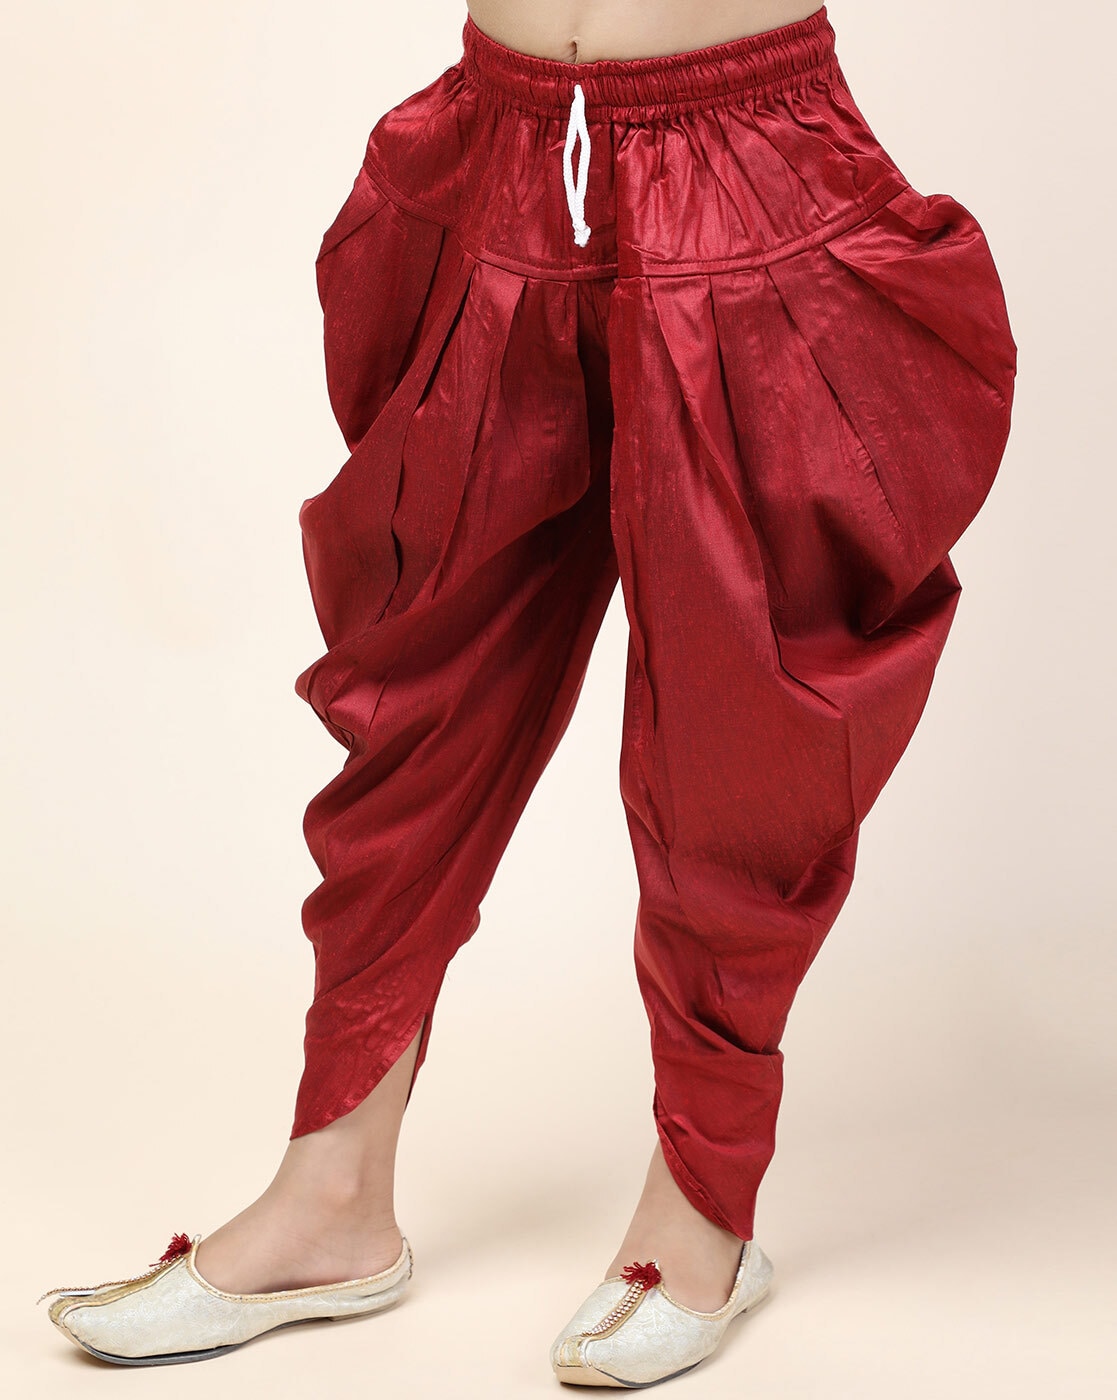 FANZI Beige Mirror Work Indian Traditional Readymade Dhoti Pant set for Men  | eBay